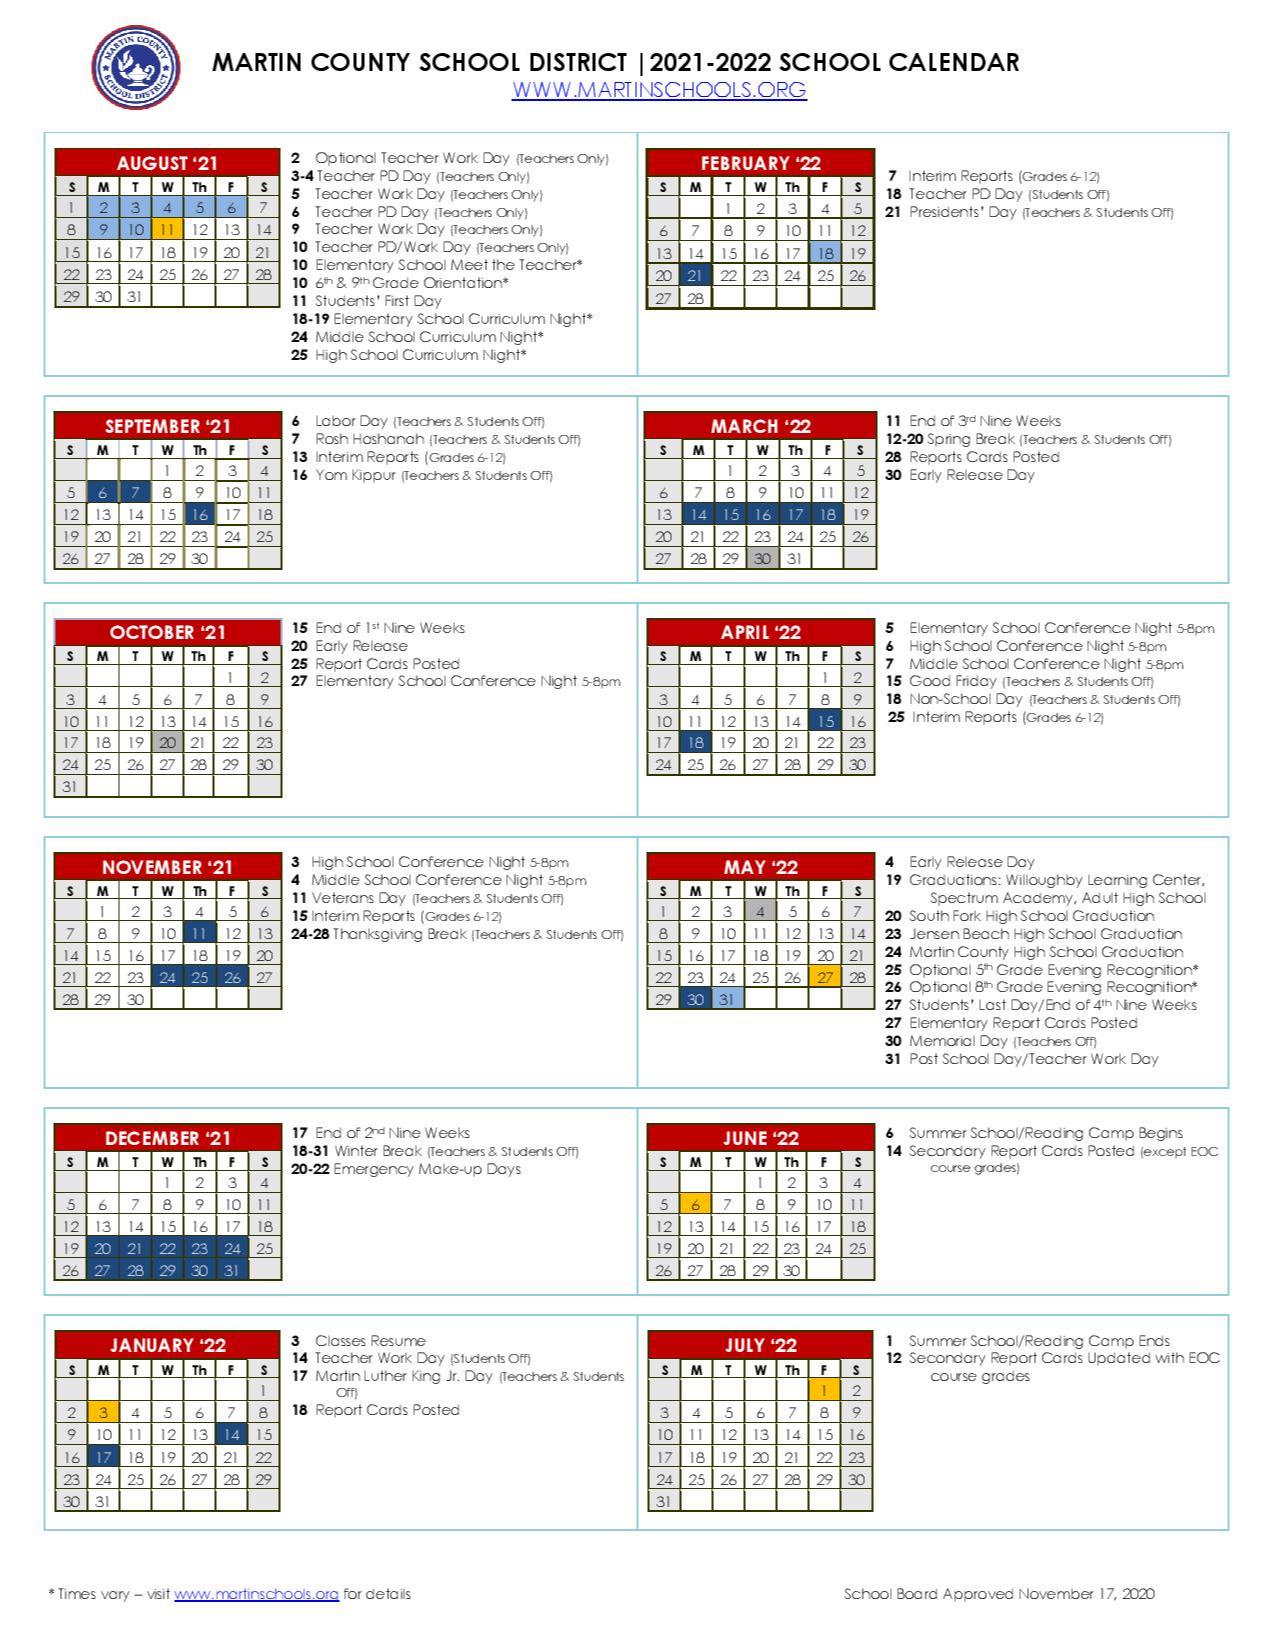 gallup-mckinley-county-schools-calendar-2021-and-2022-publicholidays-us